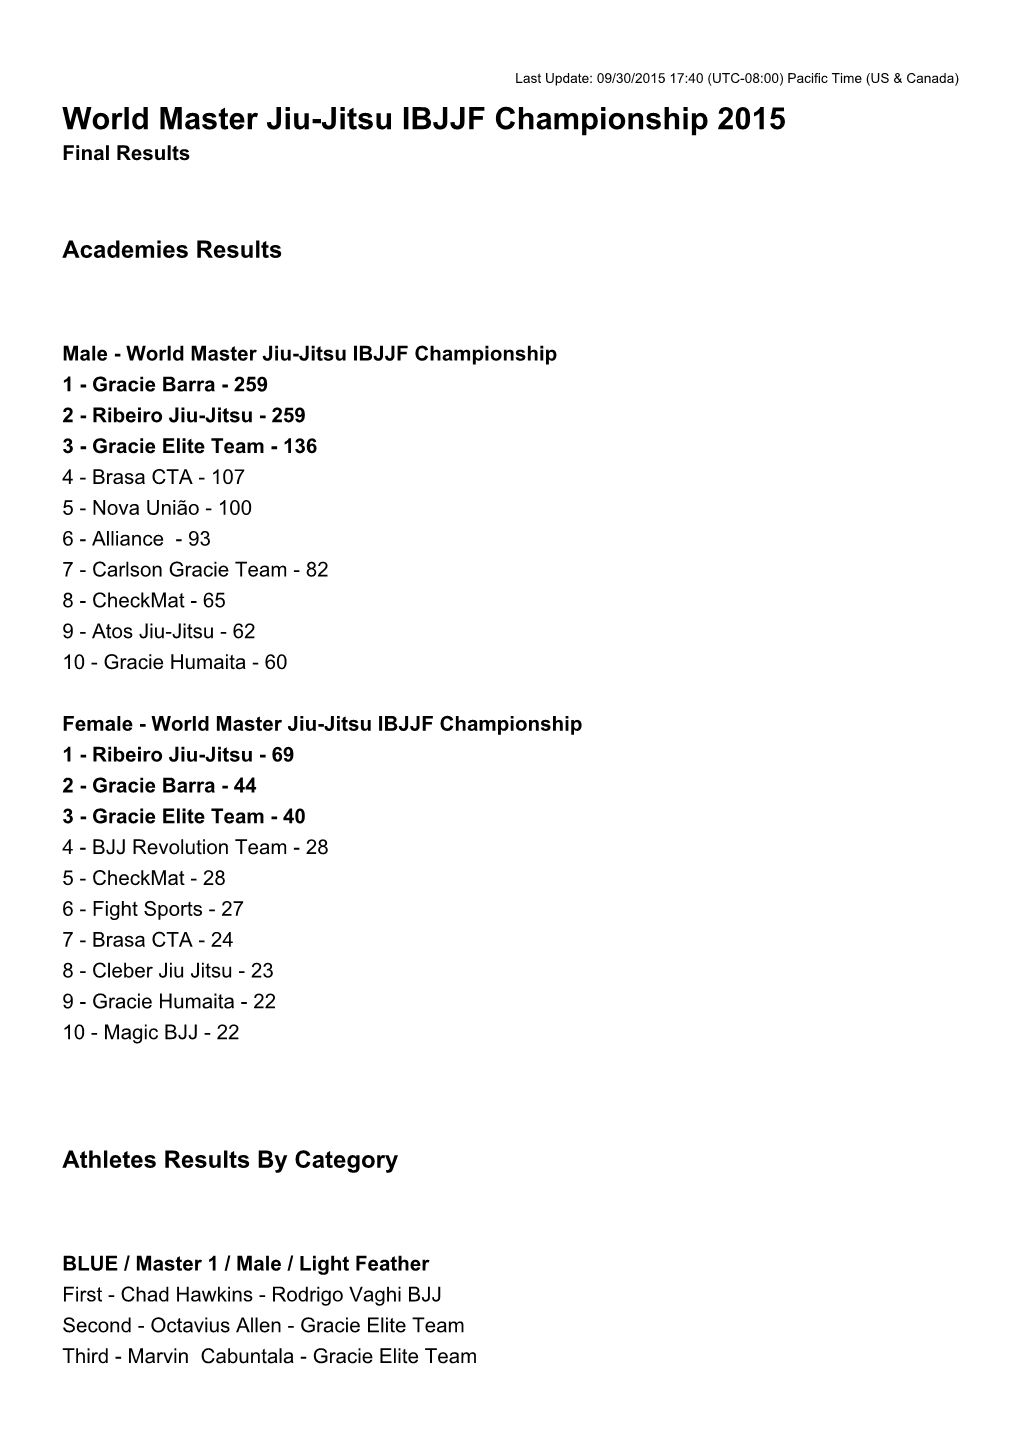 World Master Jiu-Jitsu IBJJF Championship 2015 Final Results